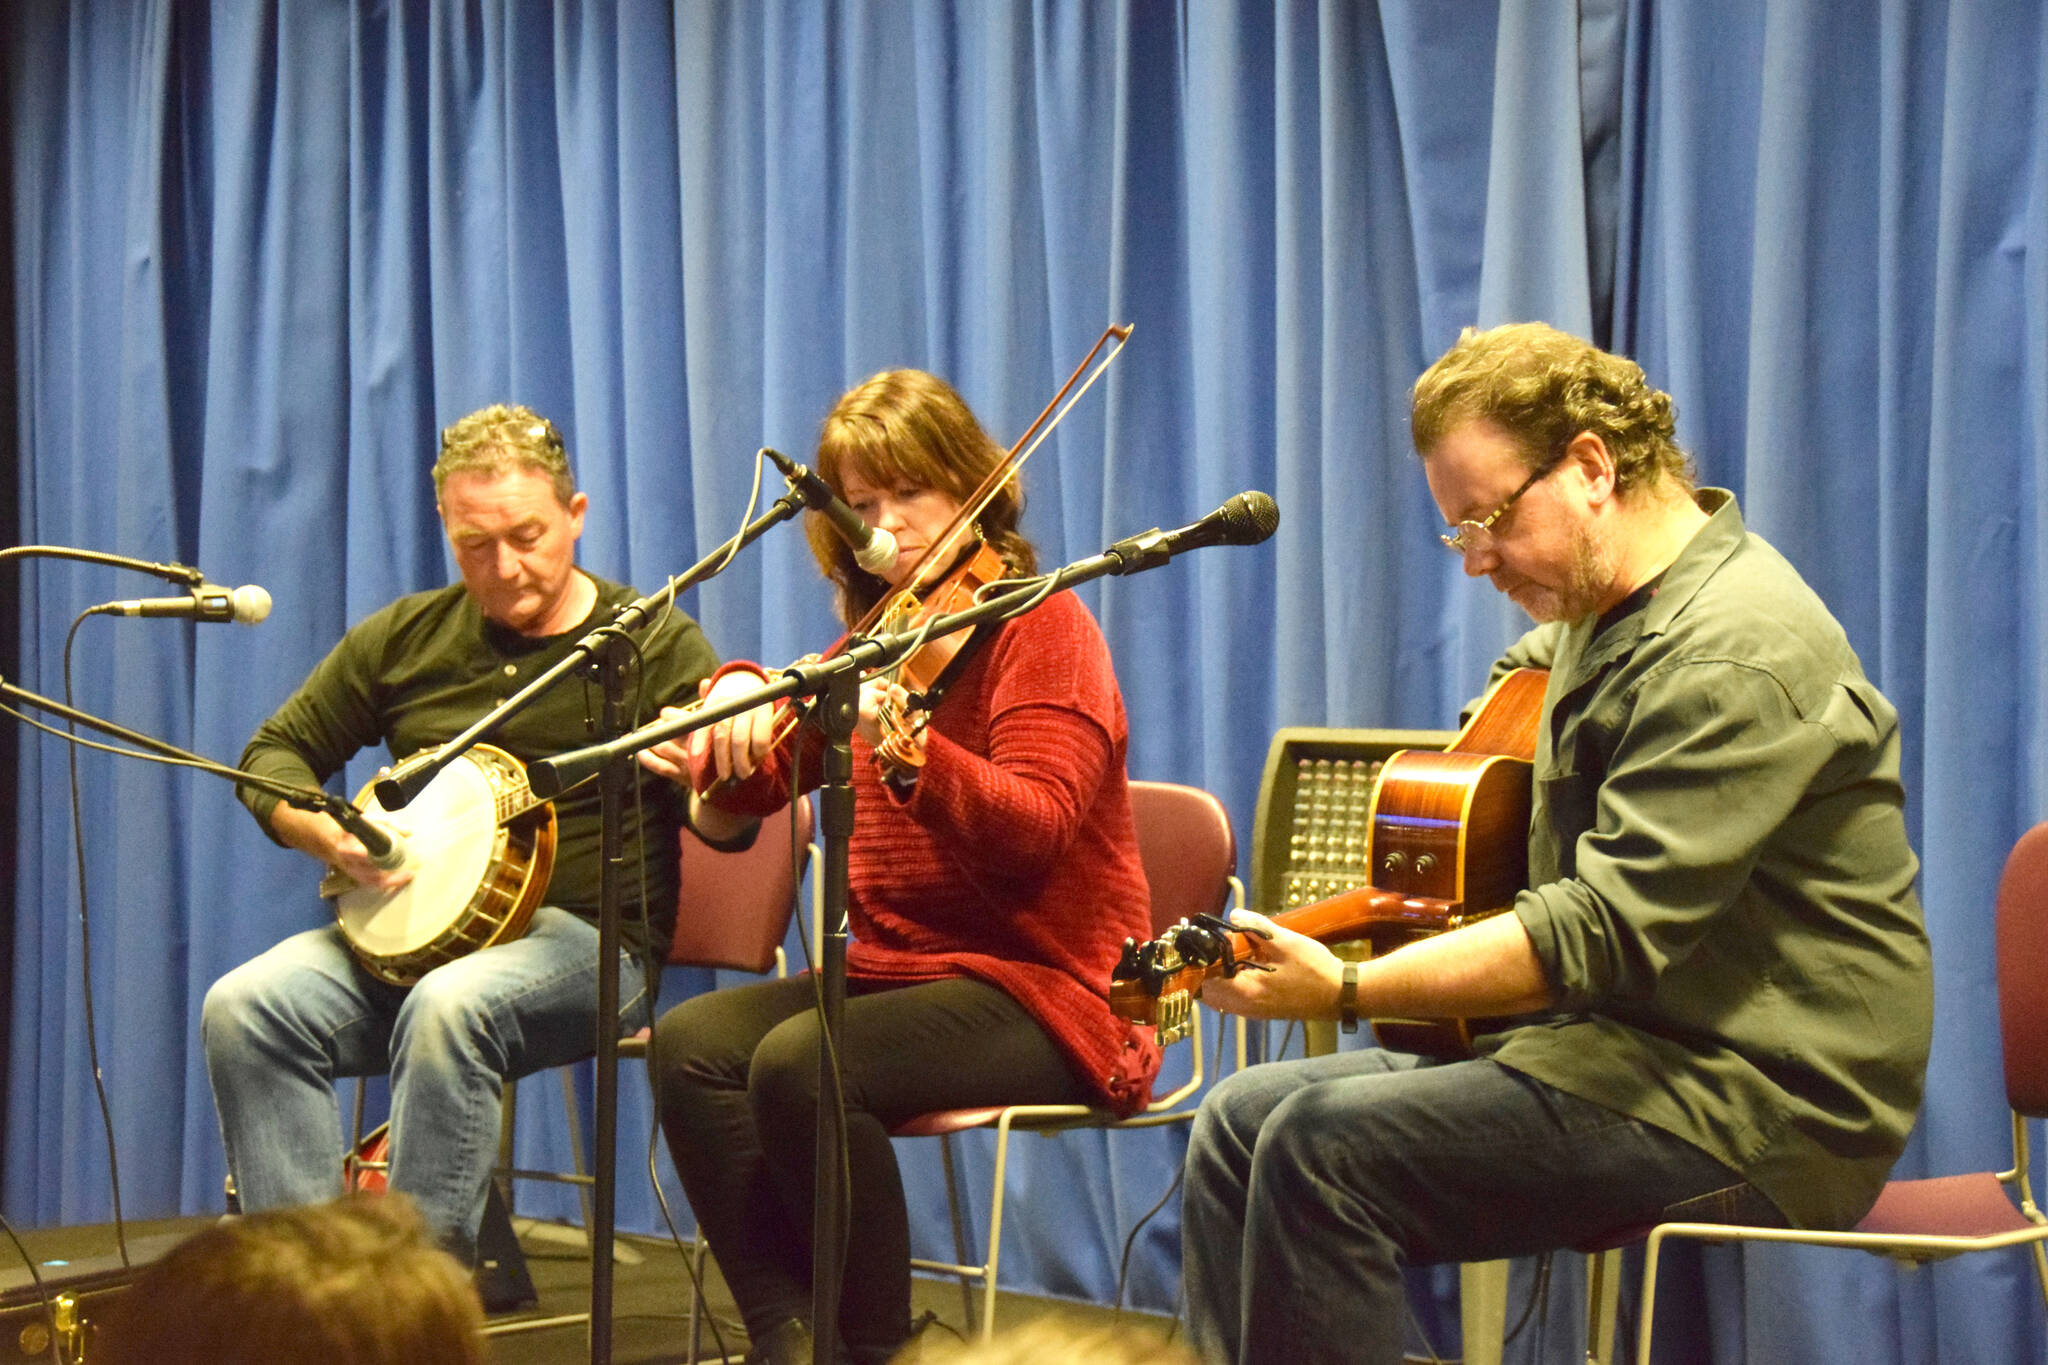 From left, musicians John Walsh, Rose Flanagan and Pat Broaders perform at the annual Winter Concert of Traditional Irish Music at Kenai Peninsula College in Kenai, Alaska, on Feb. 1, 2019. (Photo by Brian Mazurek/Peninsula Clarion)